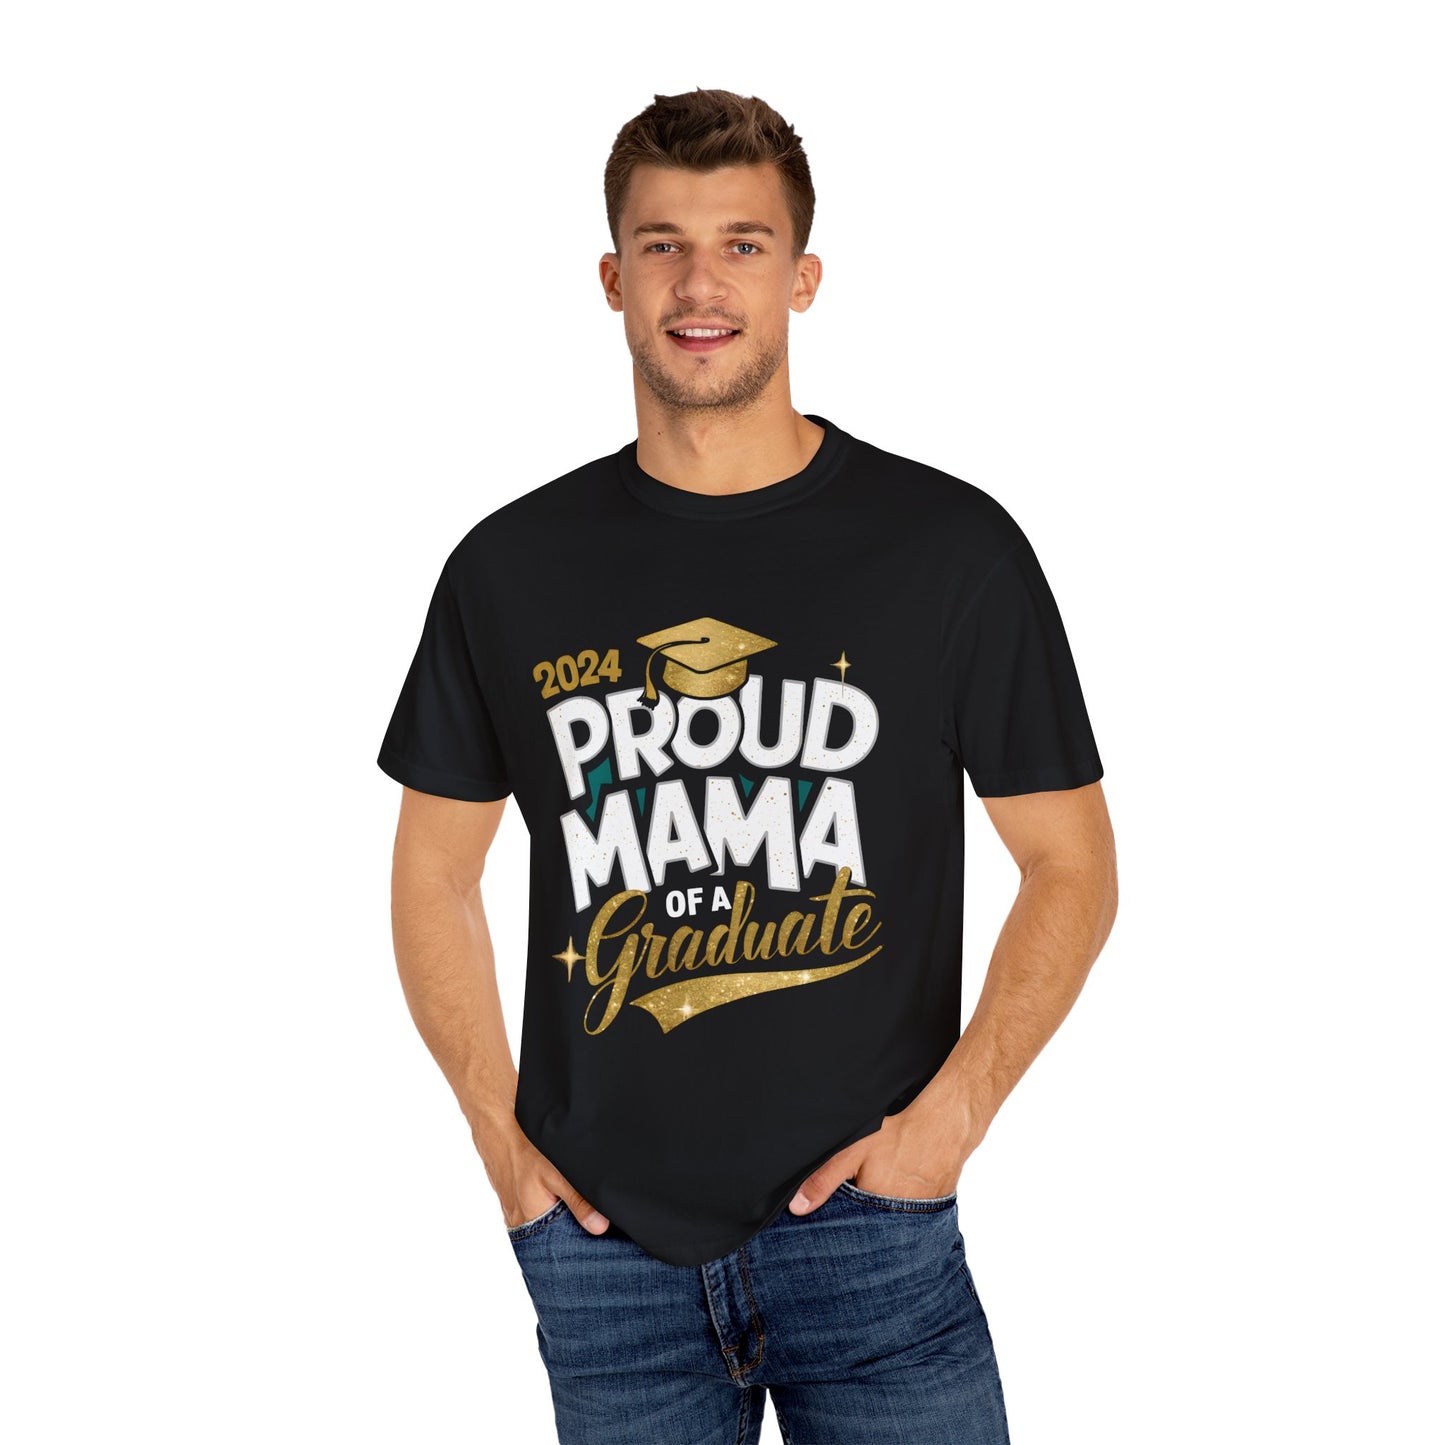 Proud Mama of a 2024 Graduate Unisex Garment-dyed T-shirt Cotton Funny Humorous Graphic Soft Premium Unisex Men Women Black T-shirt Birthday Gift-18